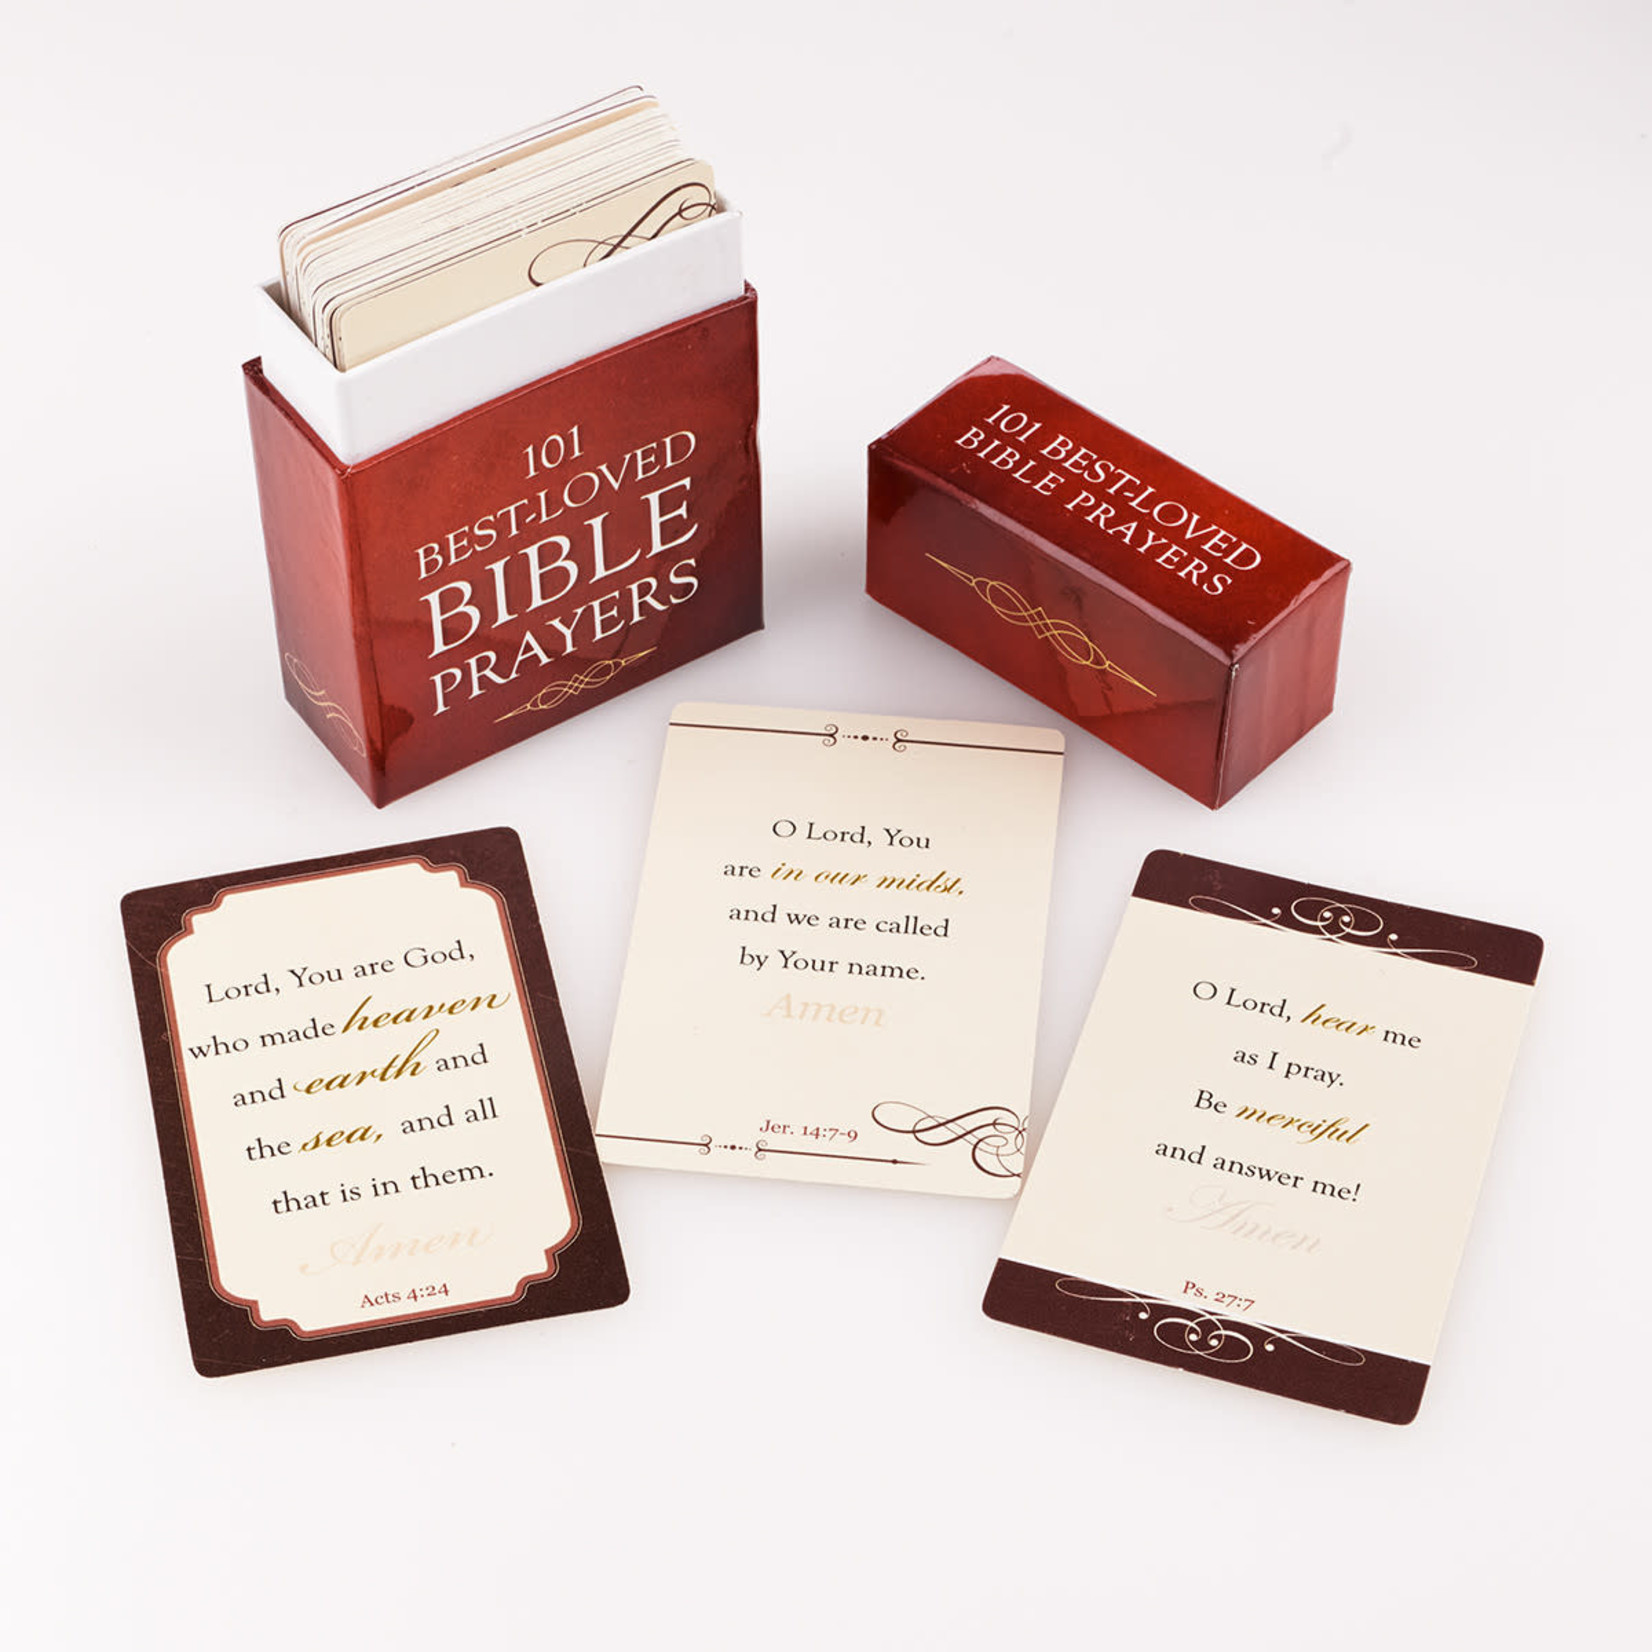 Christian Art Gifts 101 Best-loved Bible Prayers